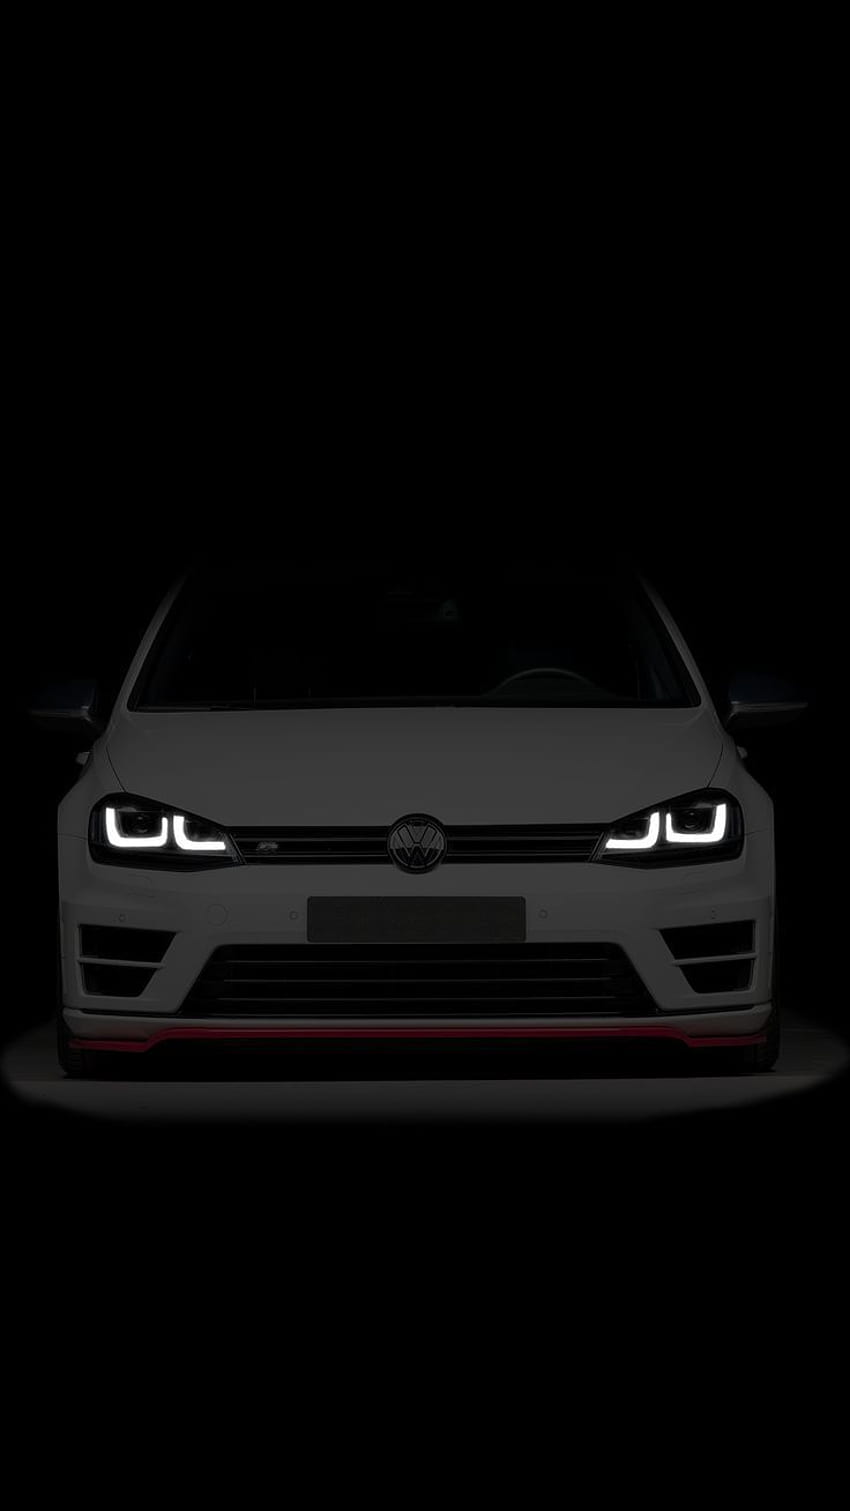 Volkswagen Golf R oscuro [] (i.redd.it) Enviado por Jbnnn Para R Amoledbackground 0 Comentarios Original - En 2021. Volkswagen Polo Gti, Volkswagen Polo, Volkswagen, VW Polo fondo de pantalla del teléfono